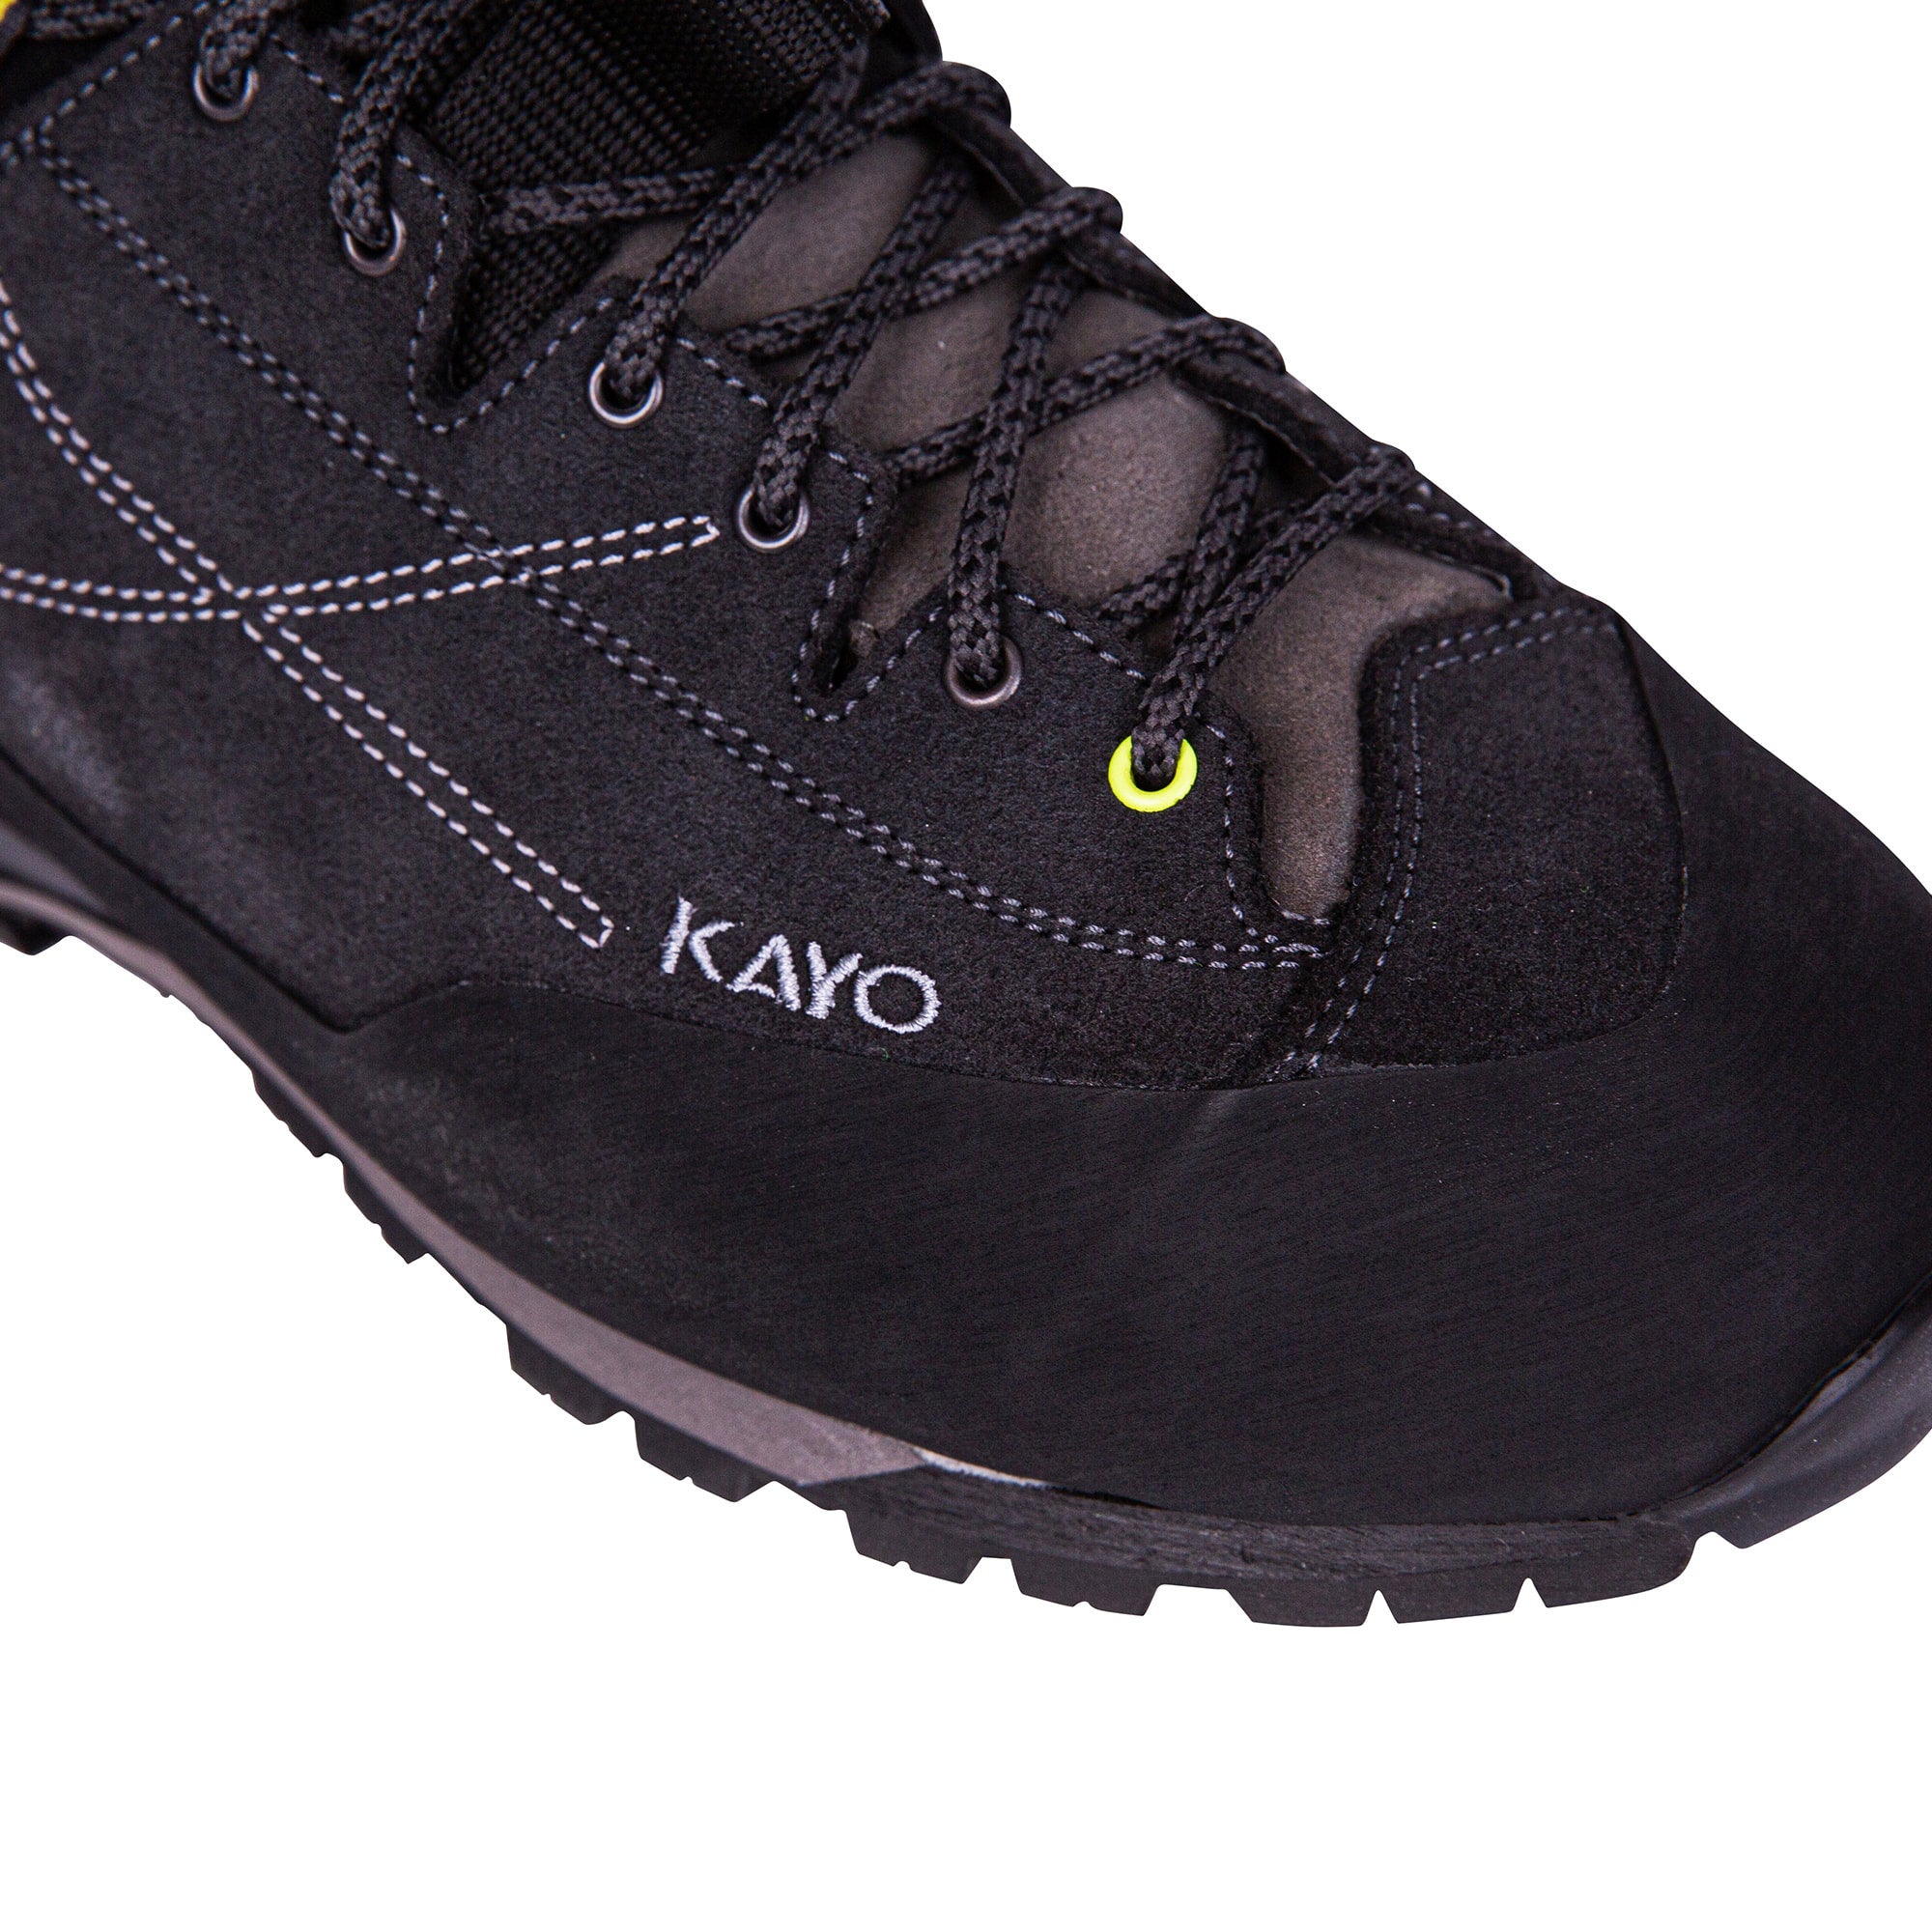 Kayo Chainsaw Boots Class 2 Arbortec | Arborist Supply Co. Inc.